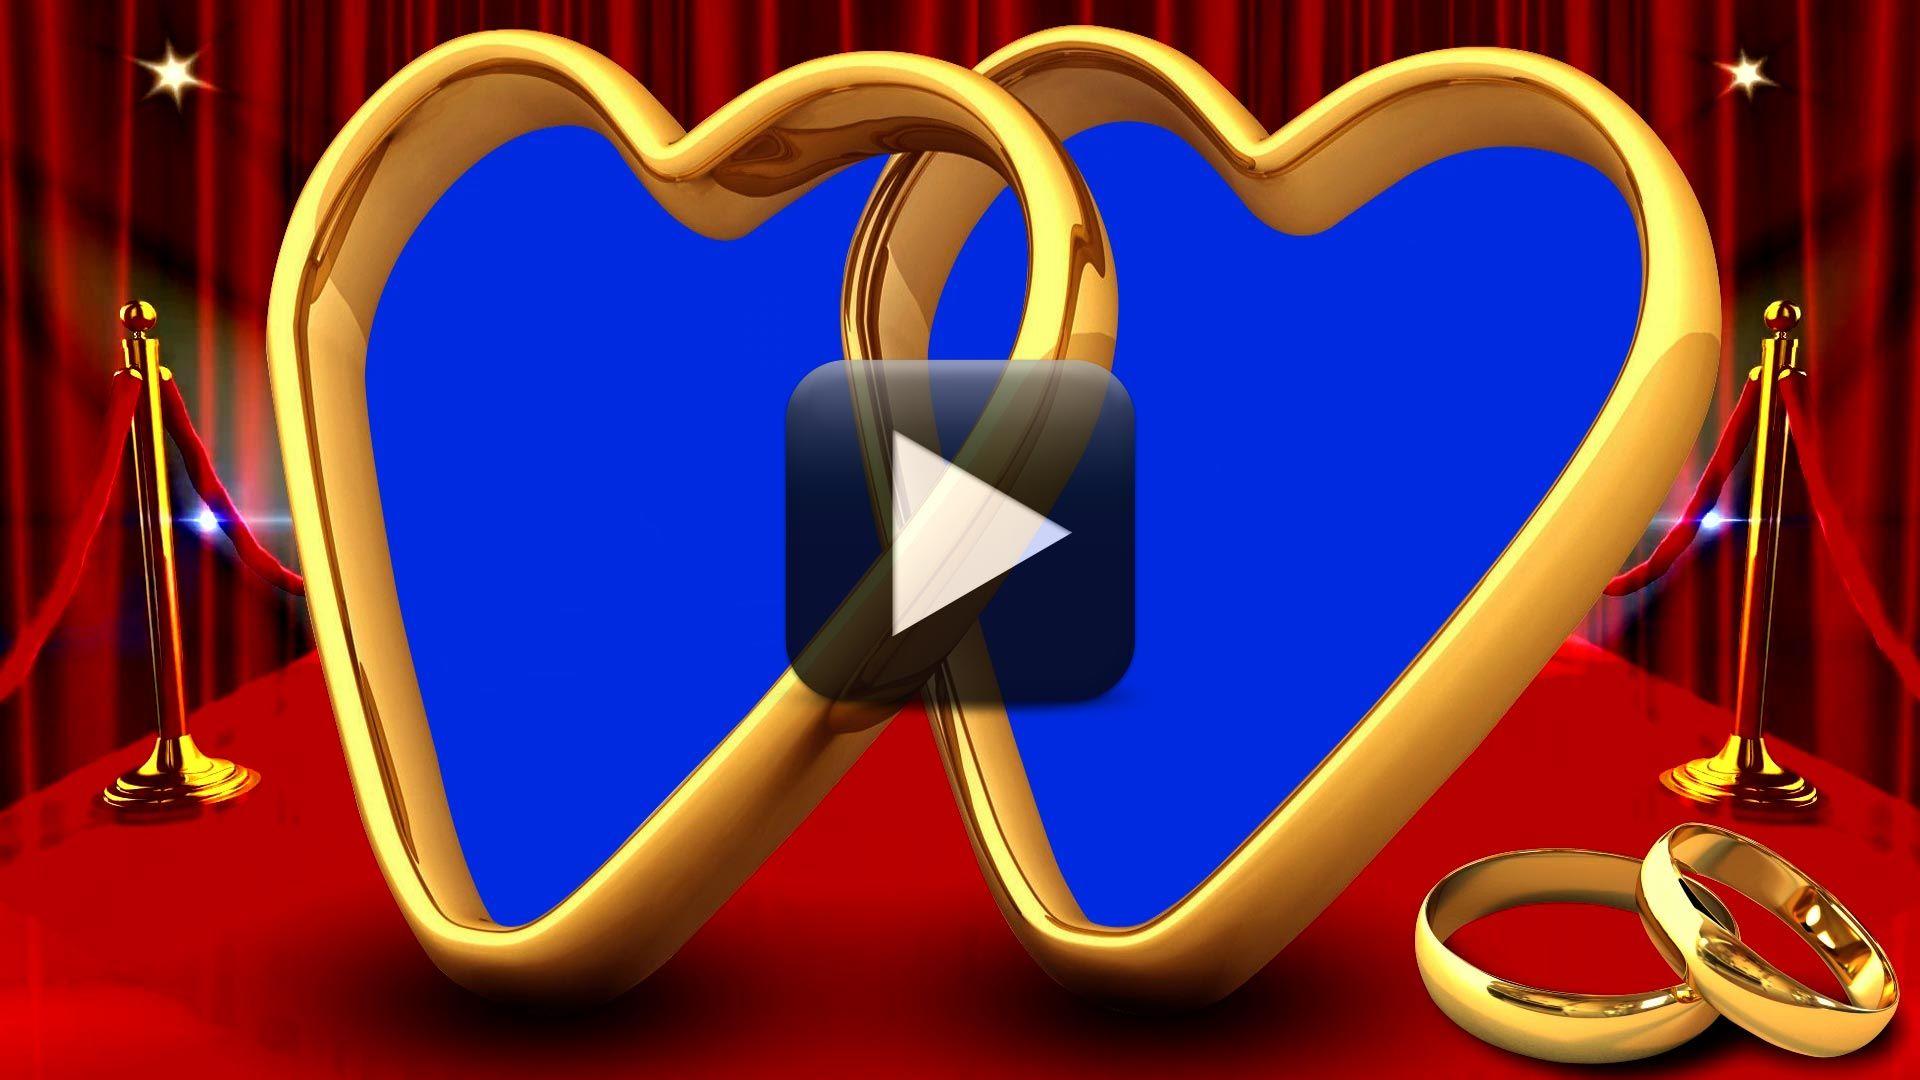 Free Love Wedding Motion Background Full HD 1080P. All Design Creative